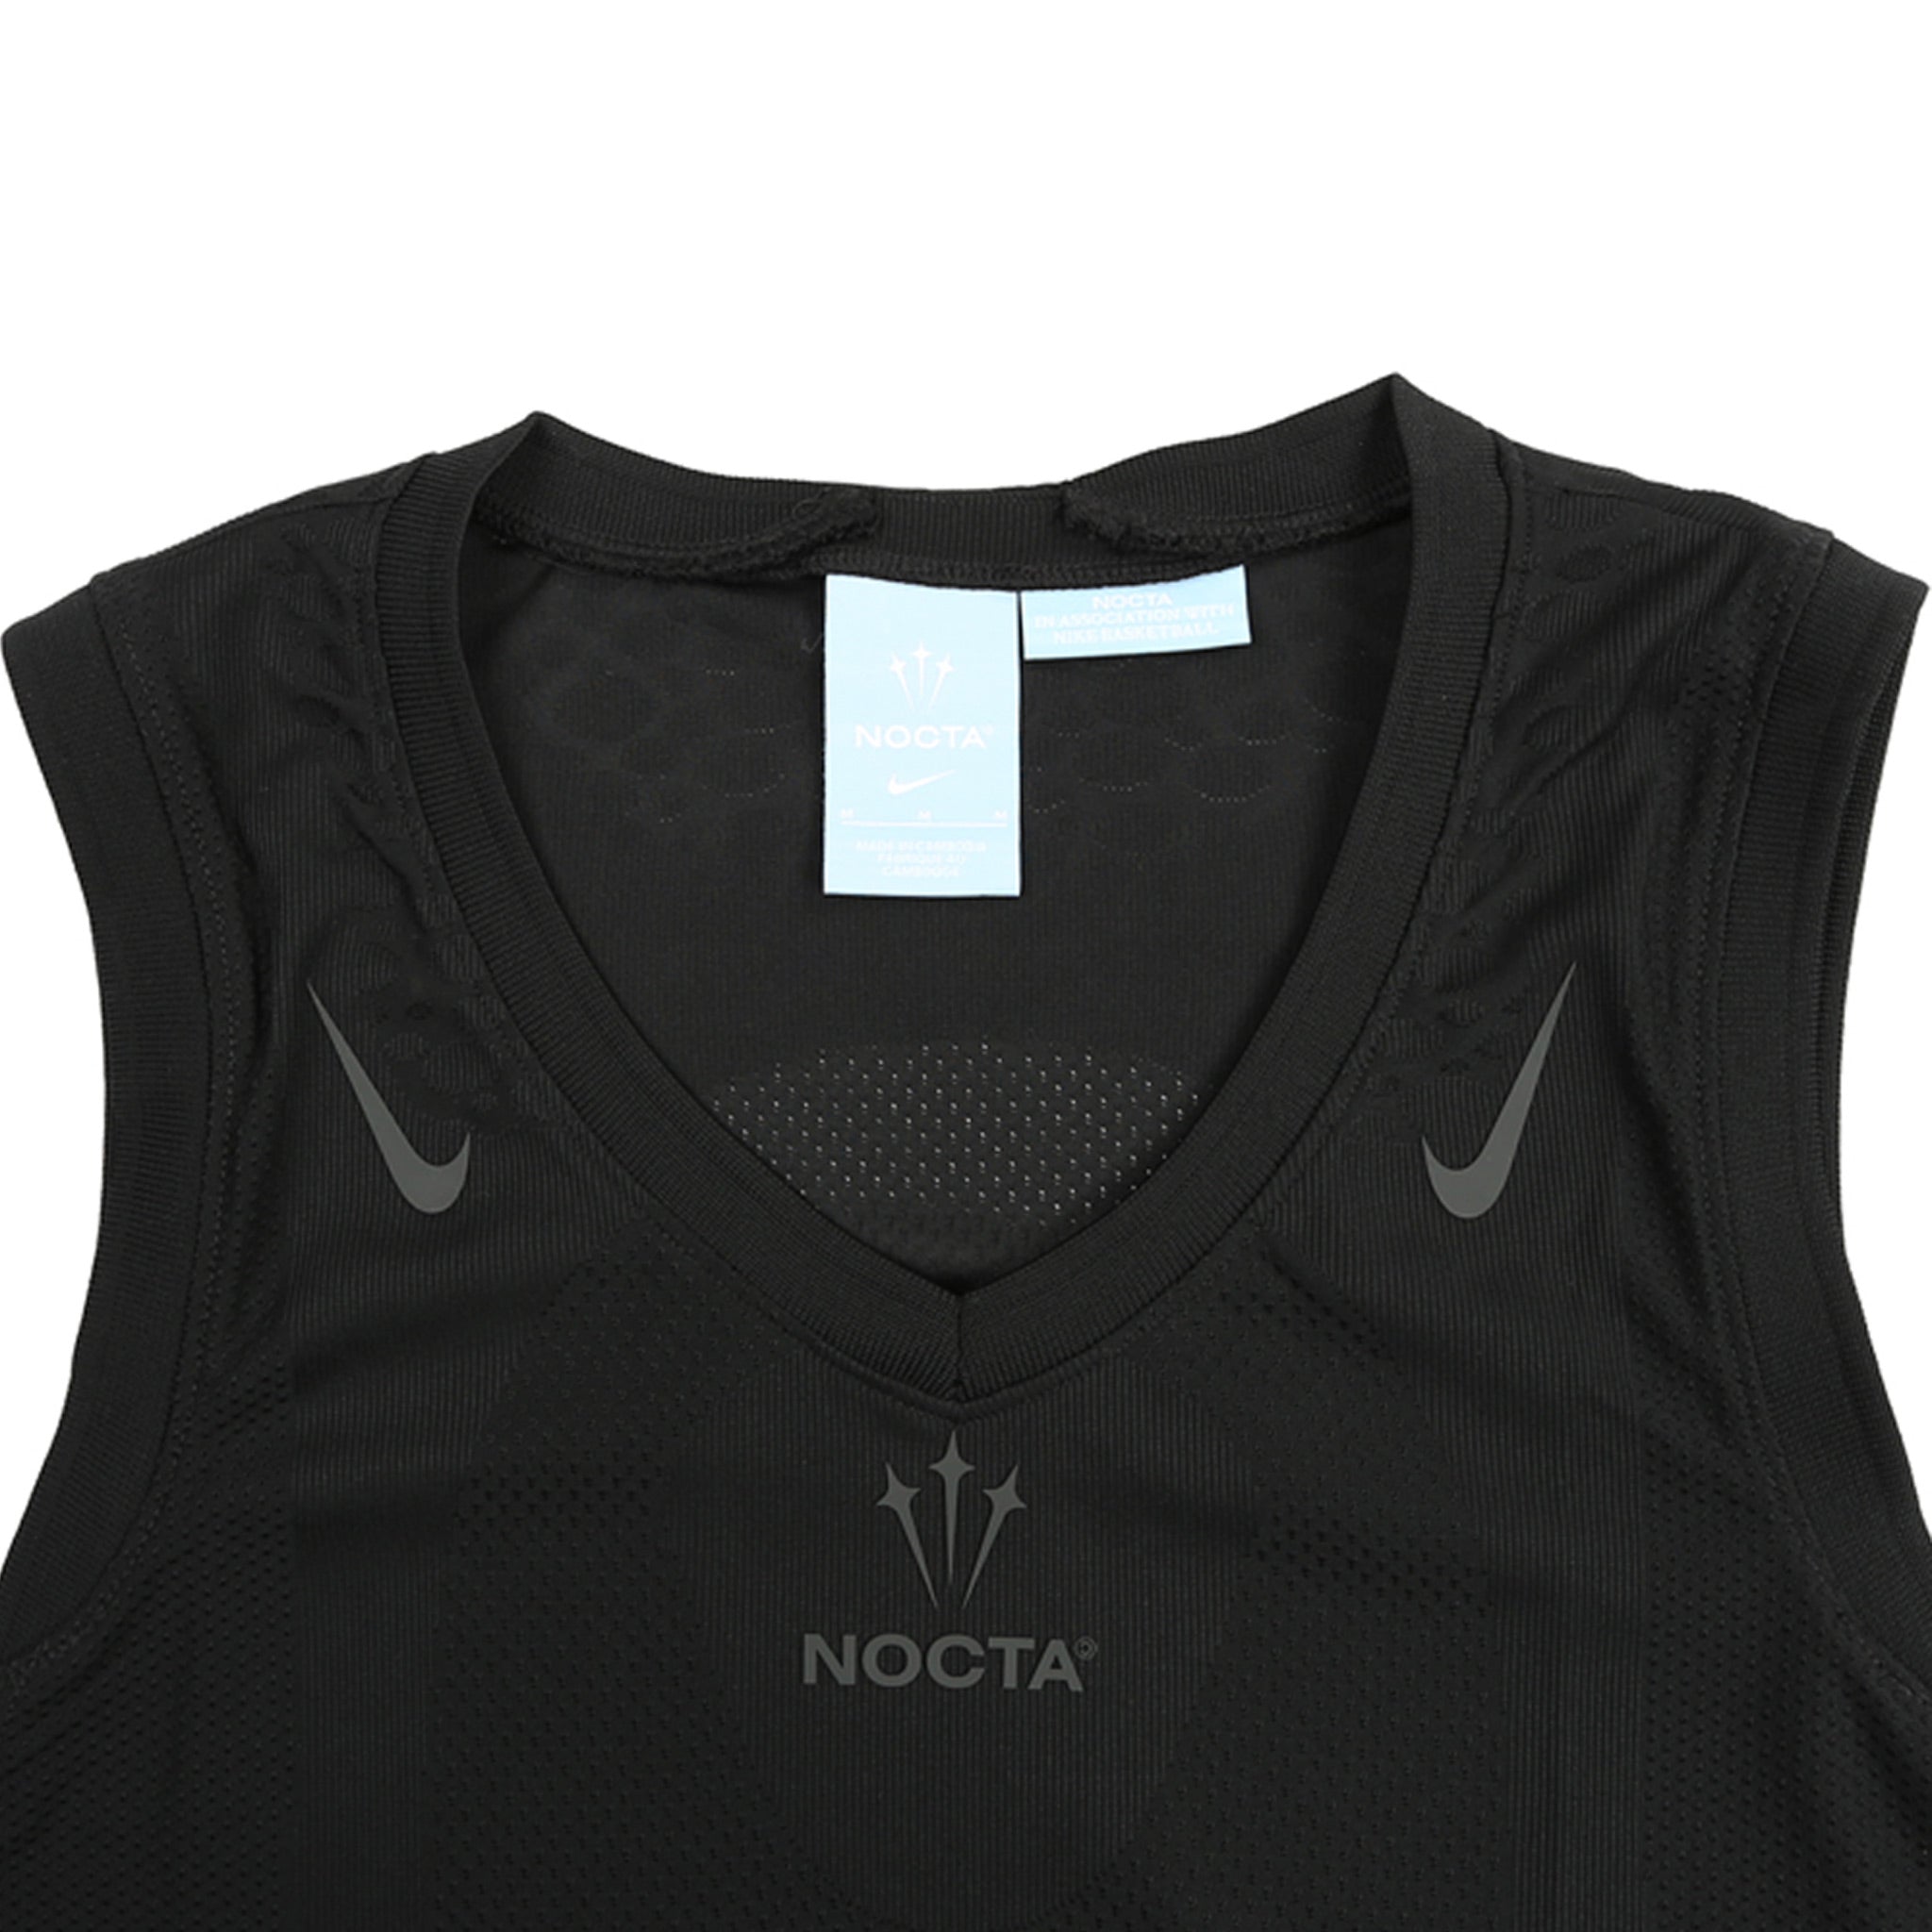 Nike x NOCTA Basketball Jersey - Black | Australia New Zealand CLOSE UP